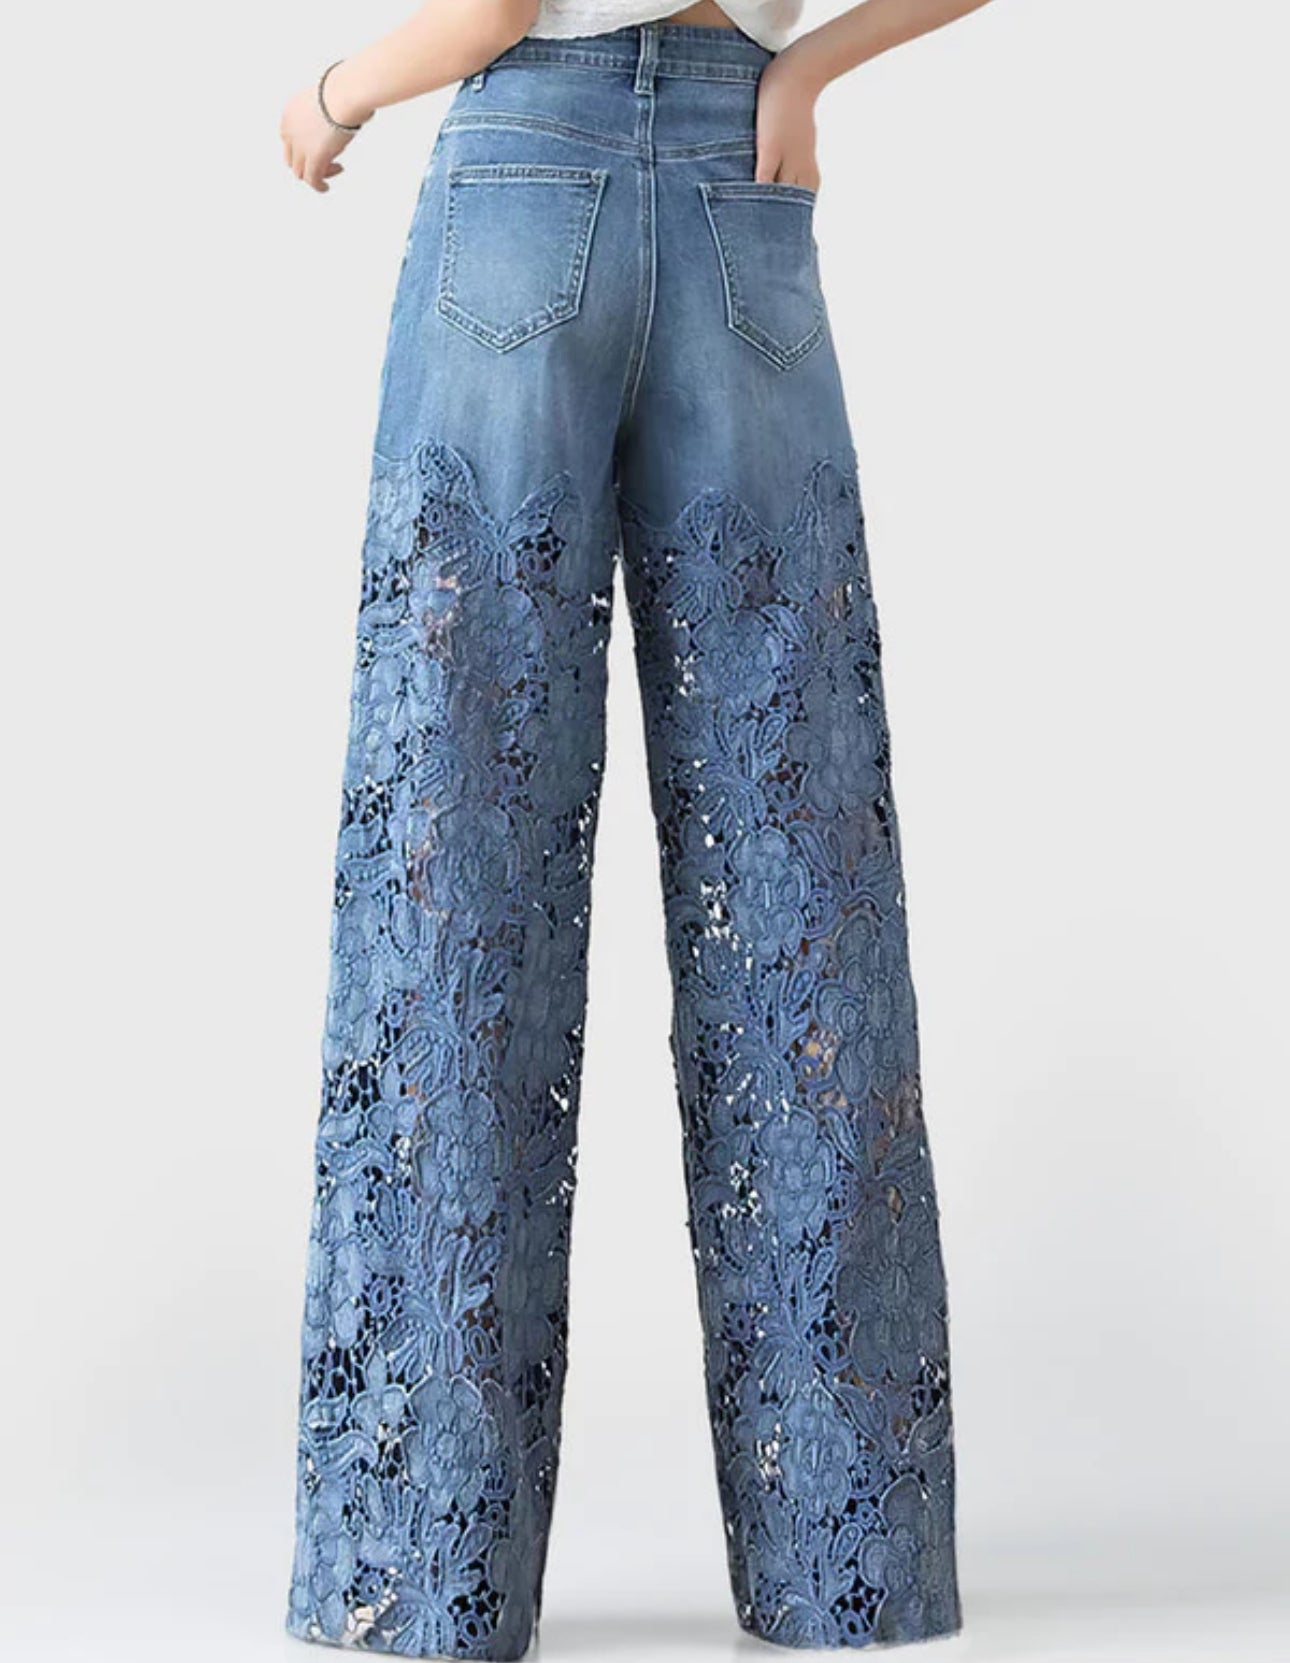 Alejandrinas Embroidered Jeans